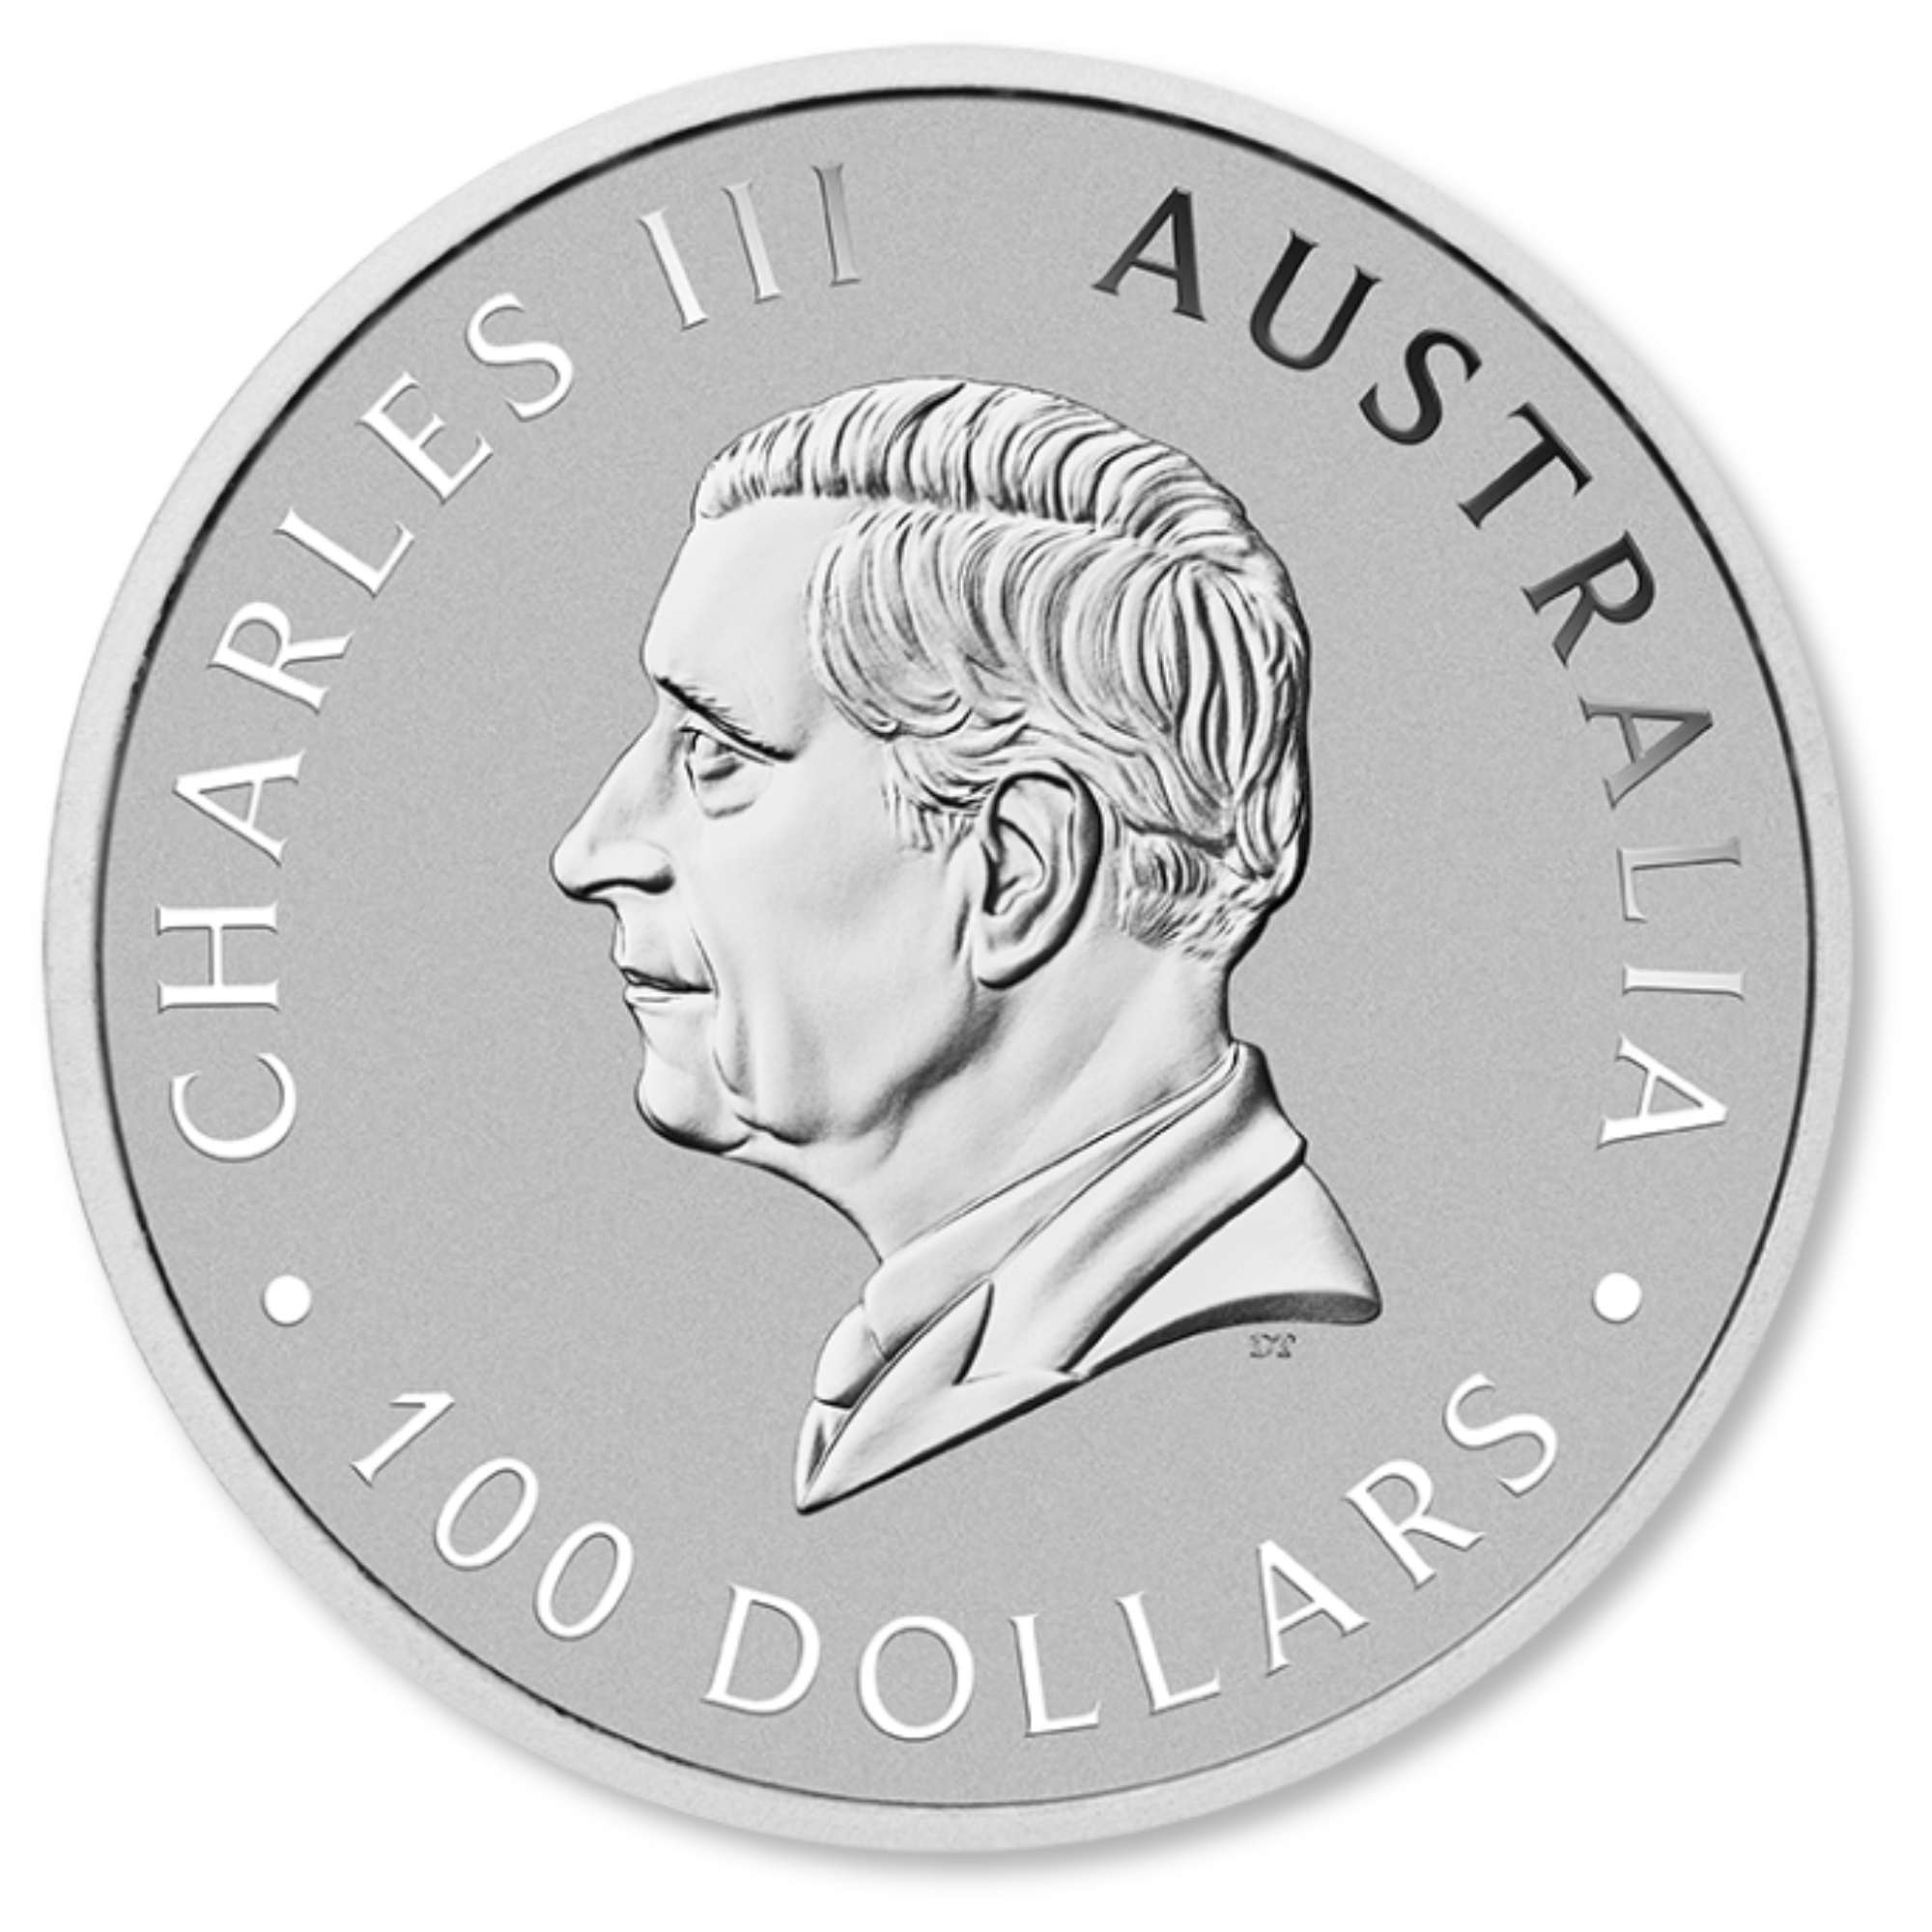 2024 1oz Perth Mint's 125th Anniversary Platinum Coin